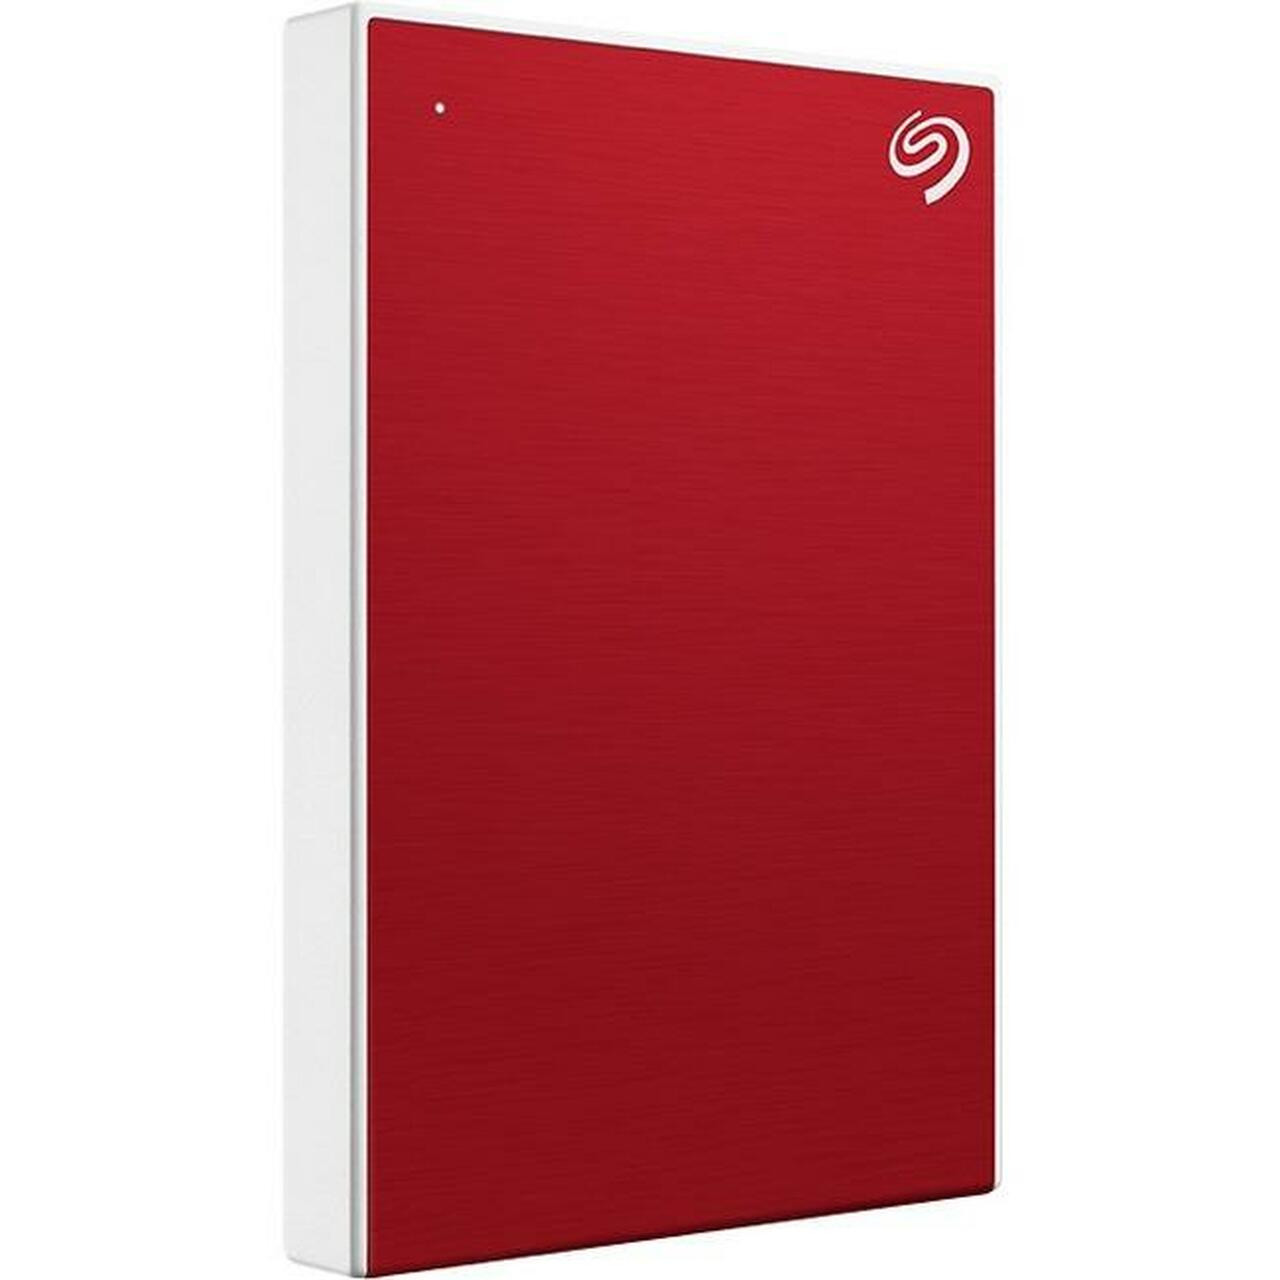 Seagate Backup Plus Slim Sthn1000403 1 Tb Portable Hard Drive - 2.5" External - Red STHN1000403